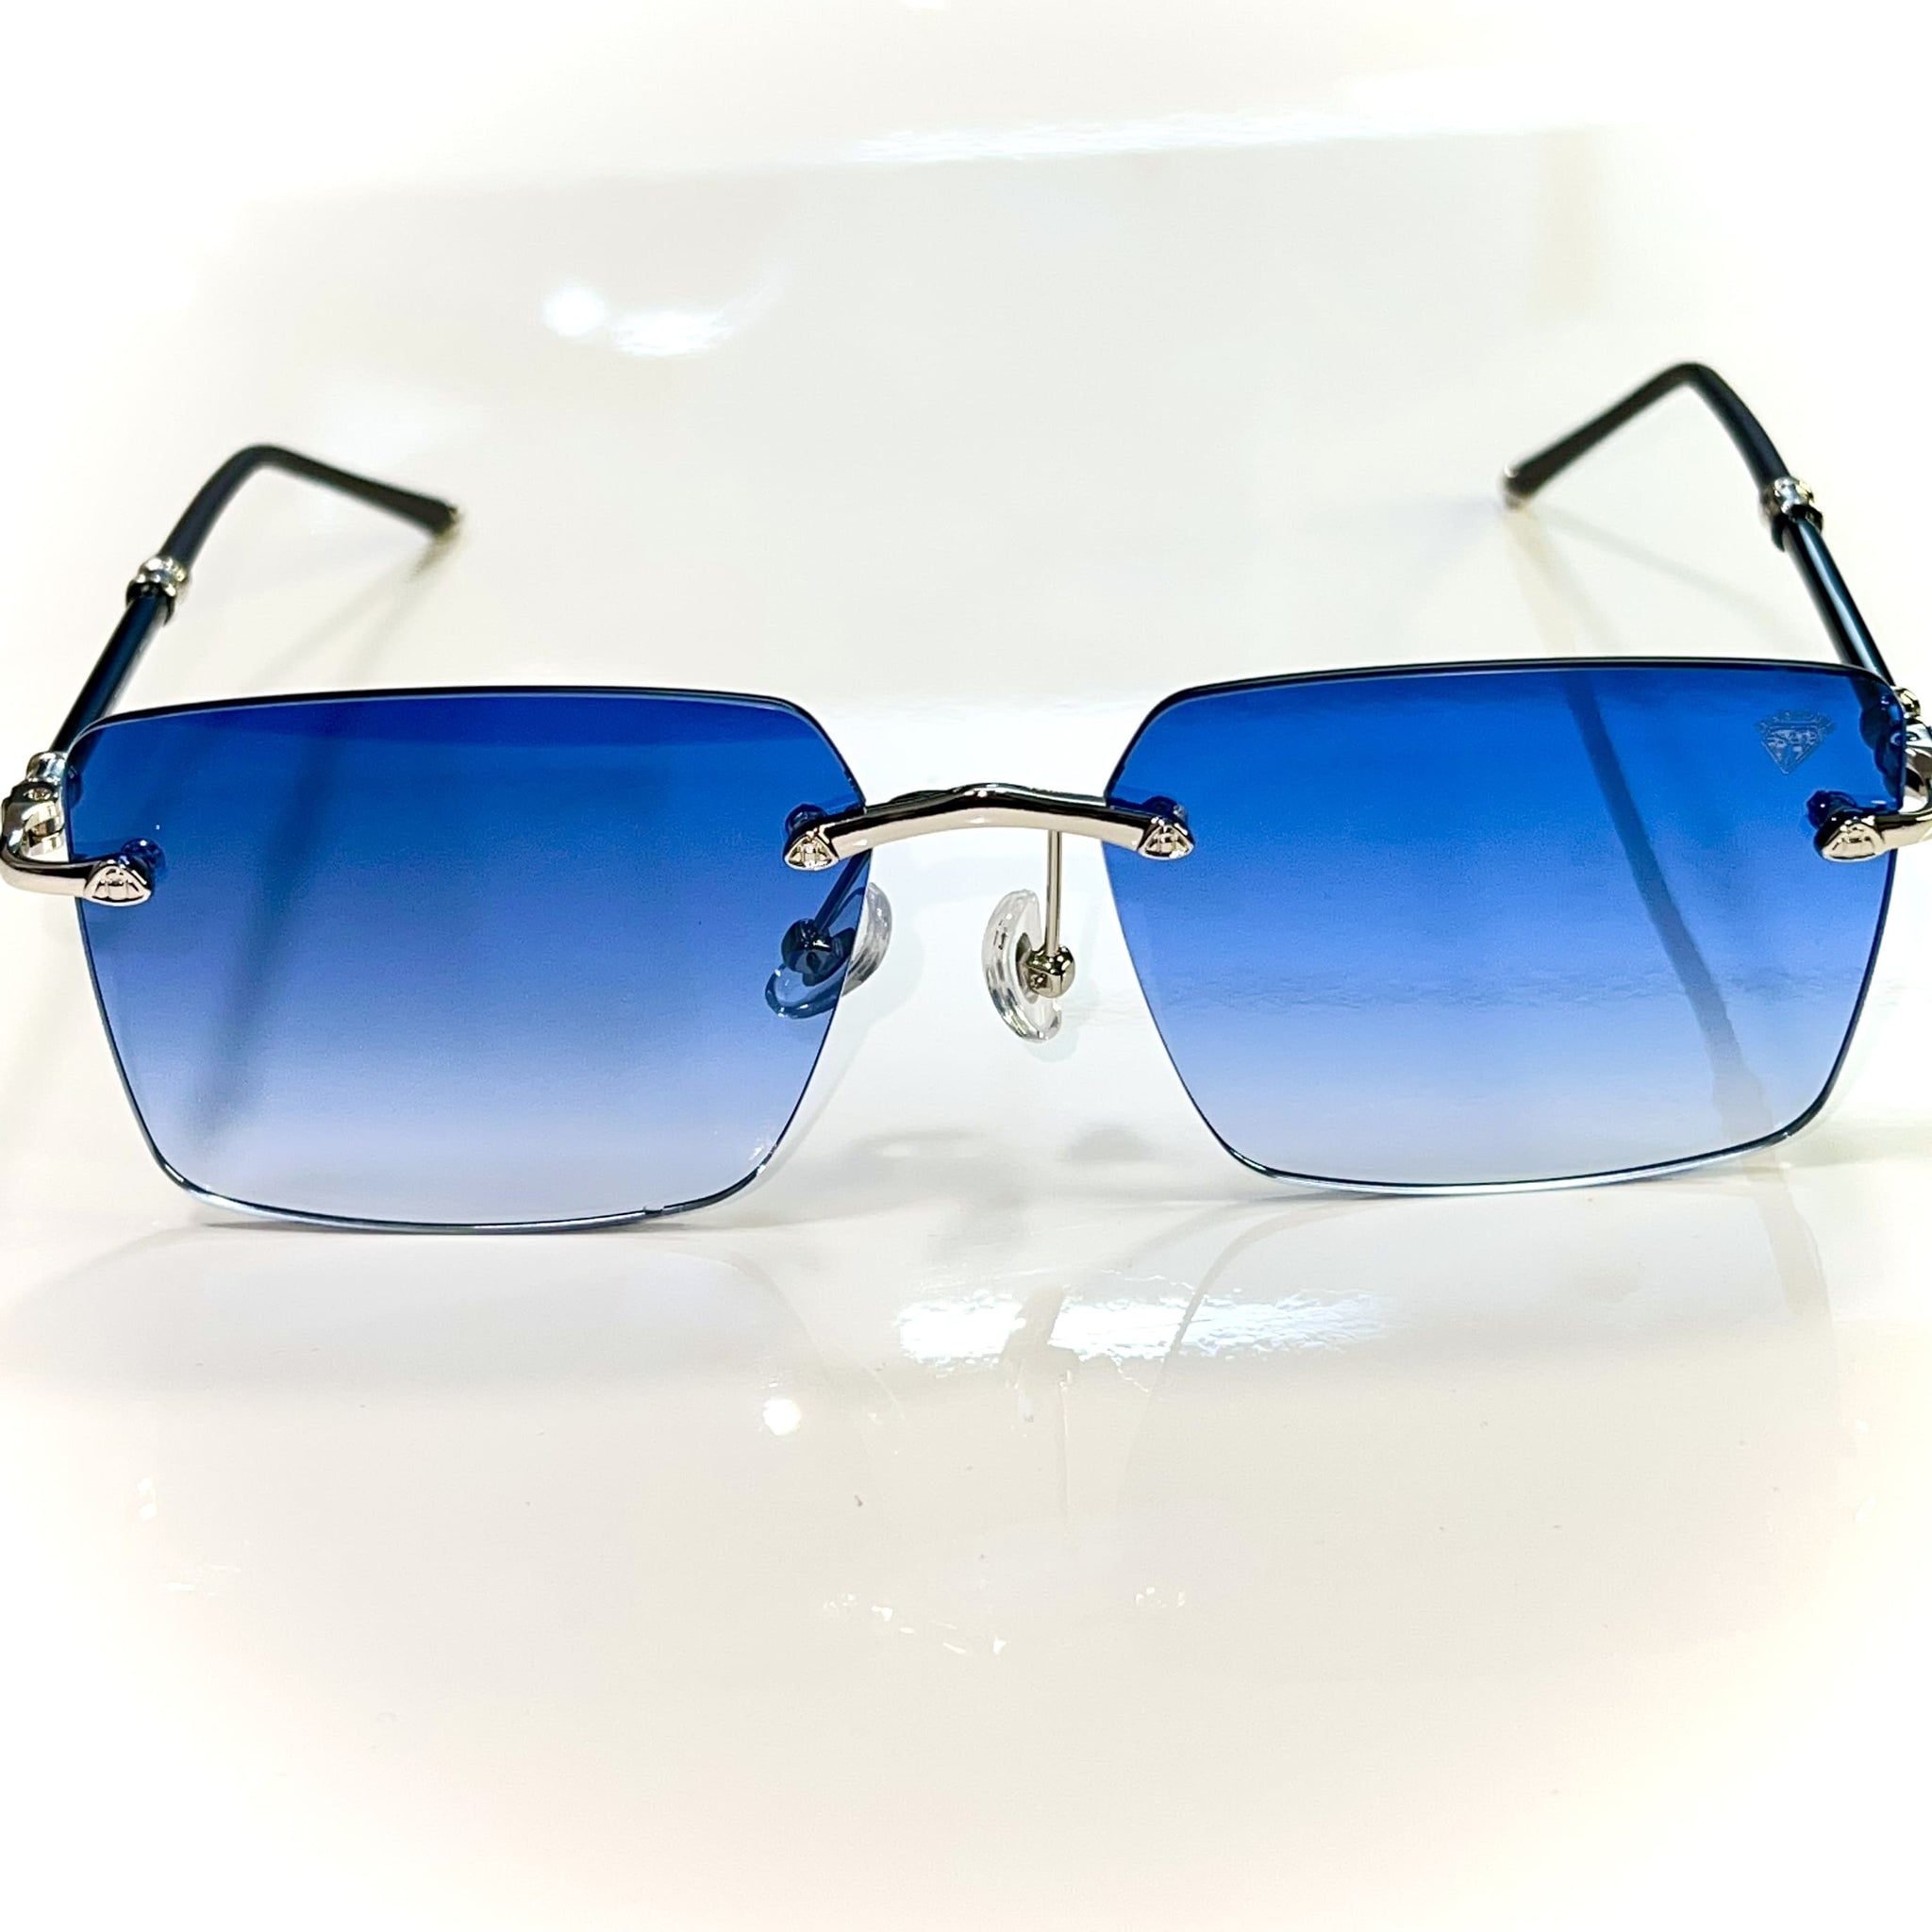 Eduardo Glasses - Silver 925 plated + Silicon side - Blue Shade - Sehgal Glasses